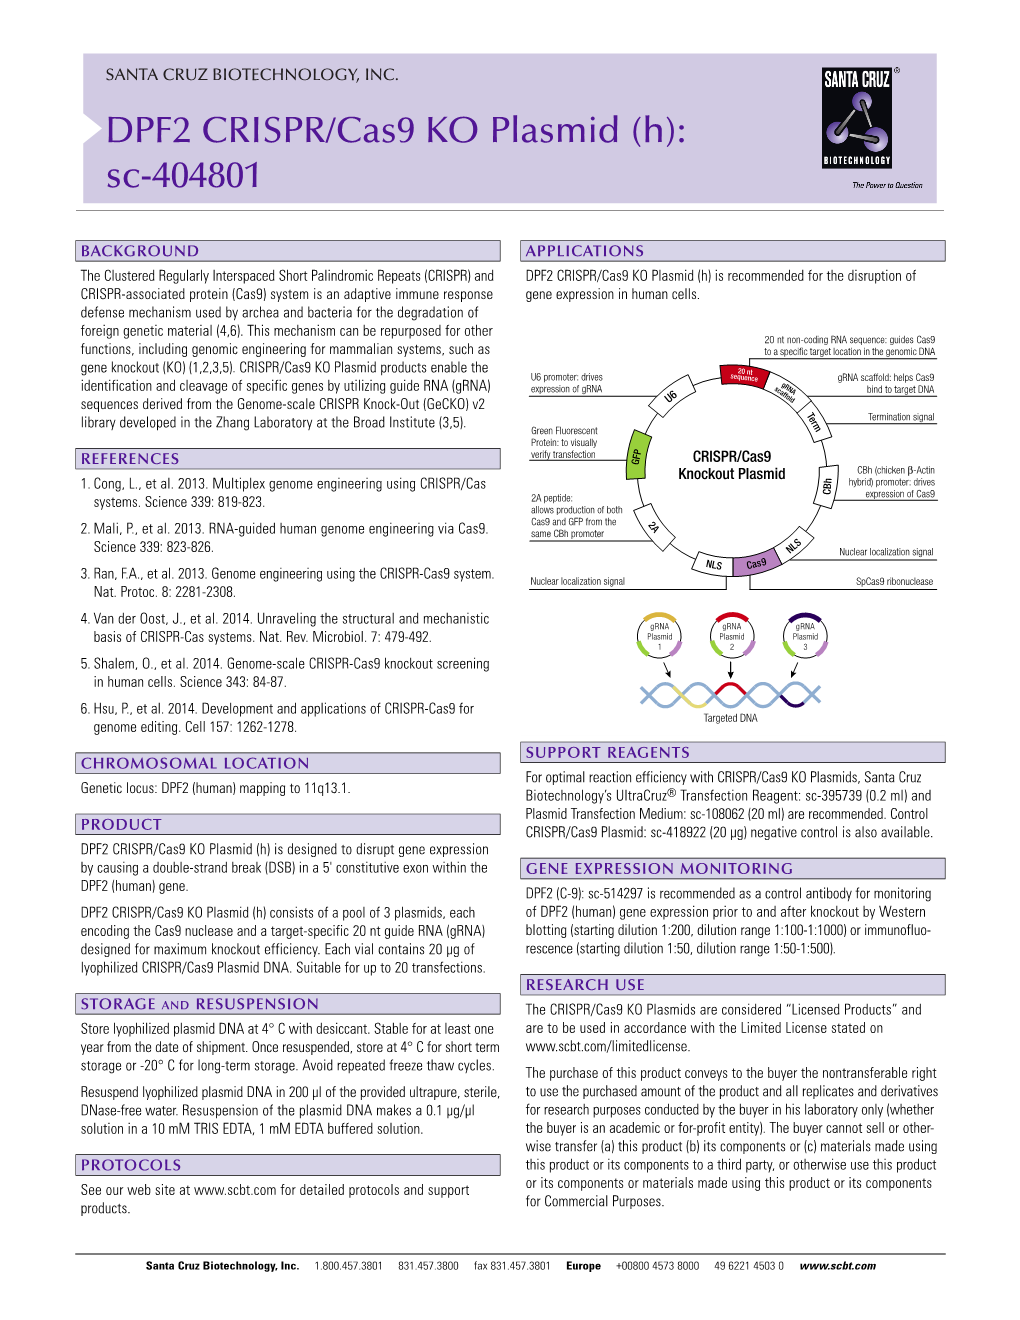 DPF2 CRISPR/Cas9 KO Plasmid (H): Sc-404801